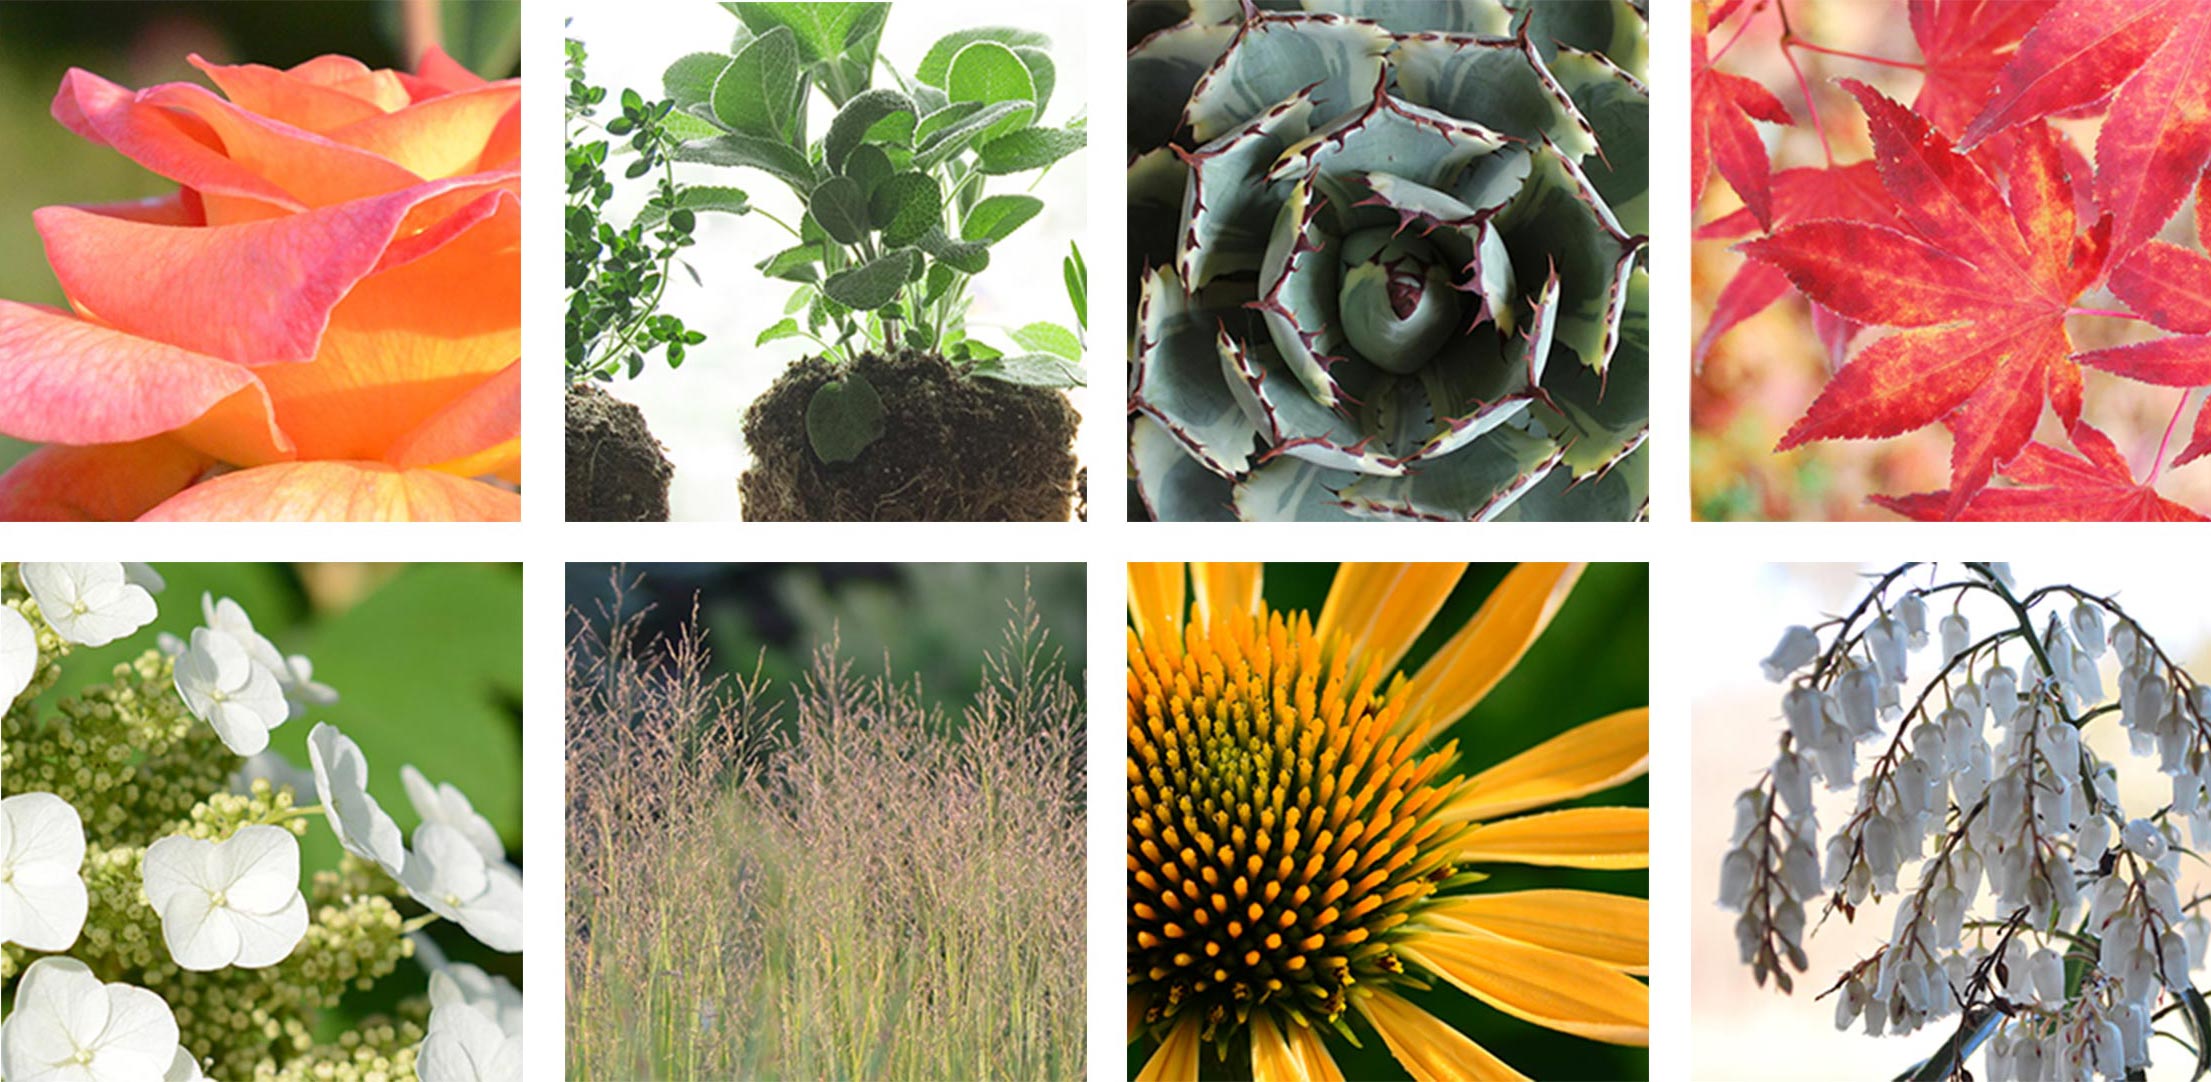 Thumbnail photos of various plants